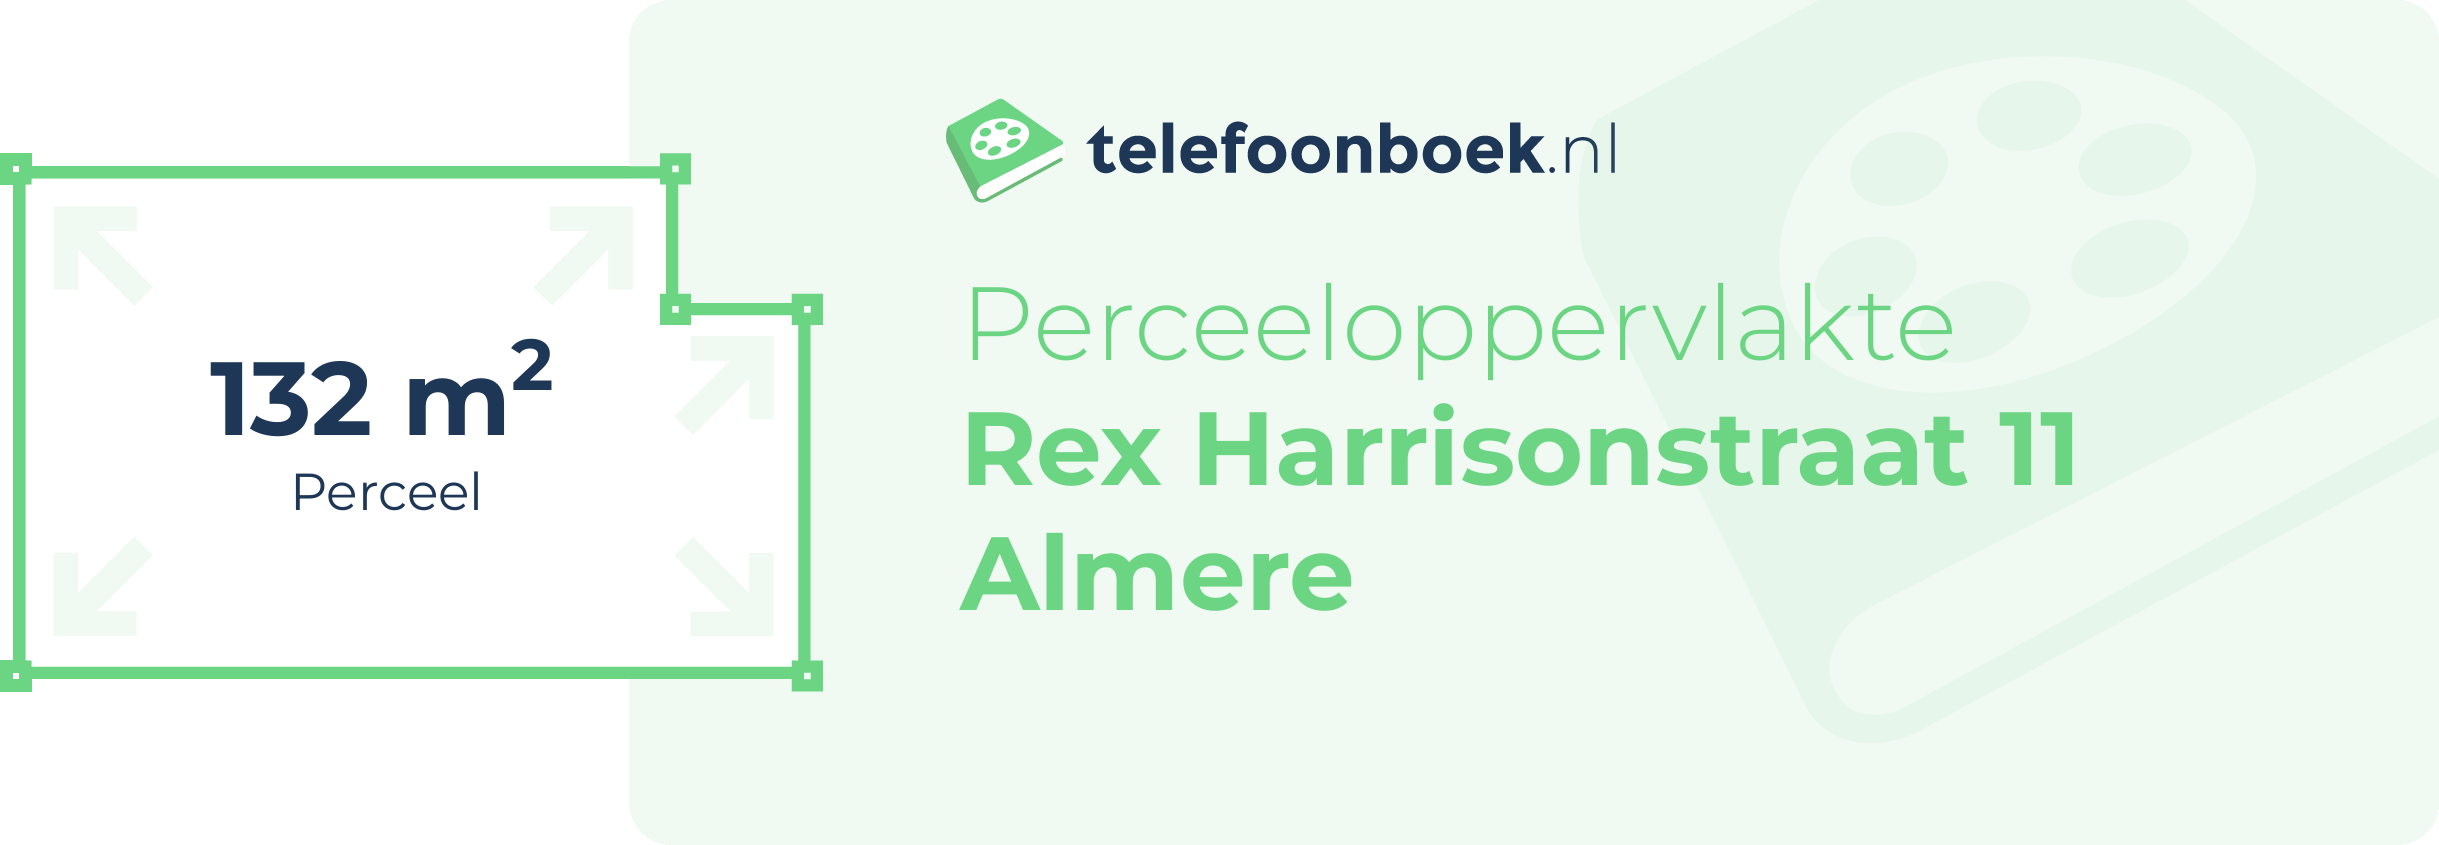 Perceeloppervlakte Rex Harrisonstraat 11 Almere